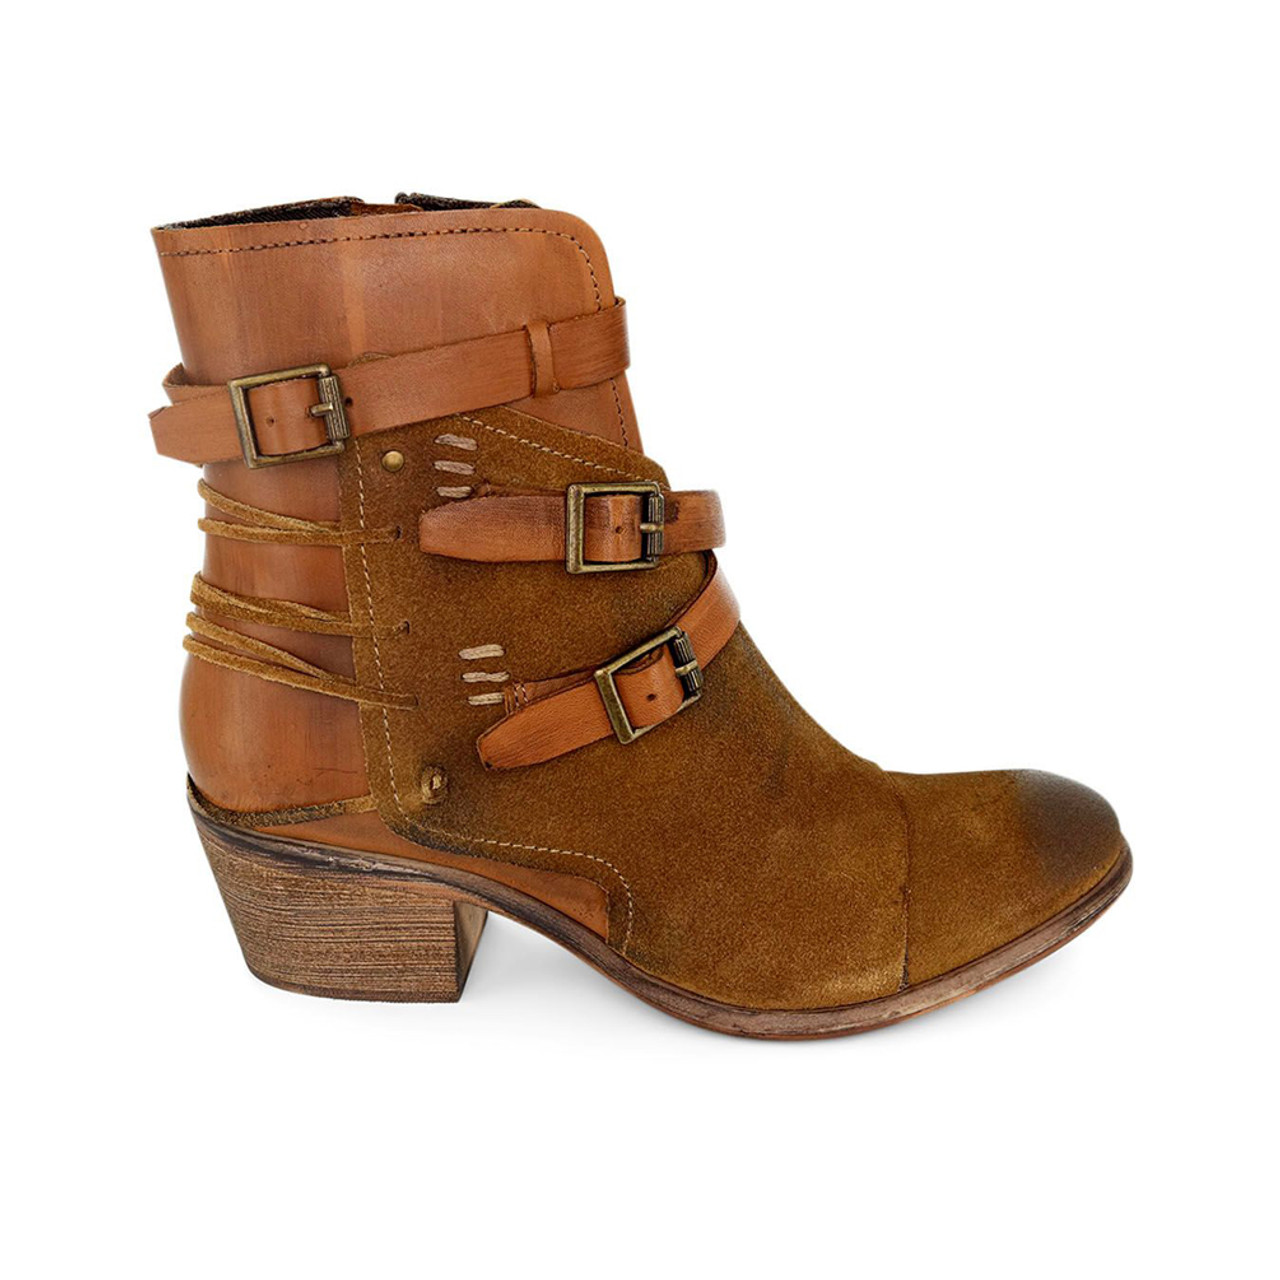 New Roan Women's Jag Boot - Brown | Discount Roan Ladies Boots & More ...